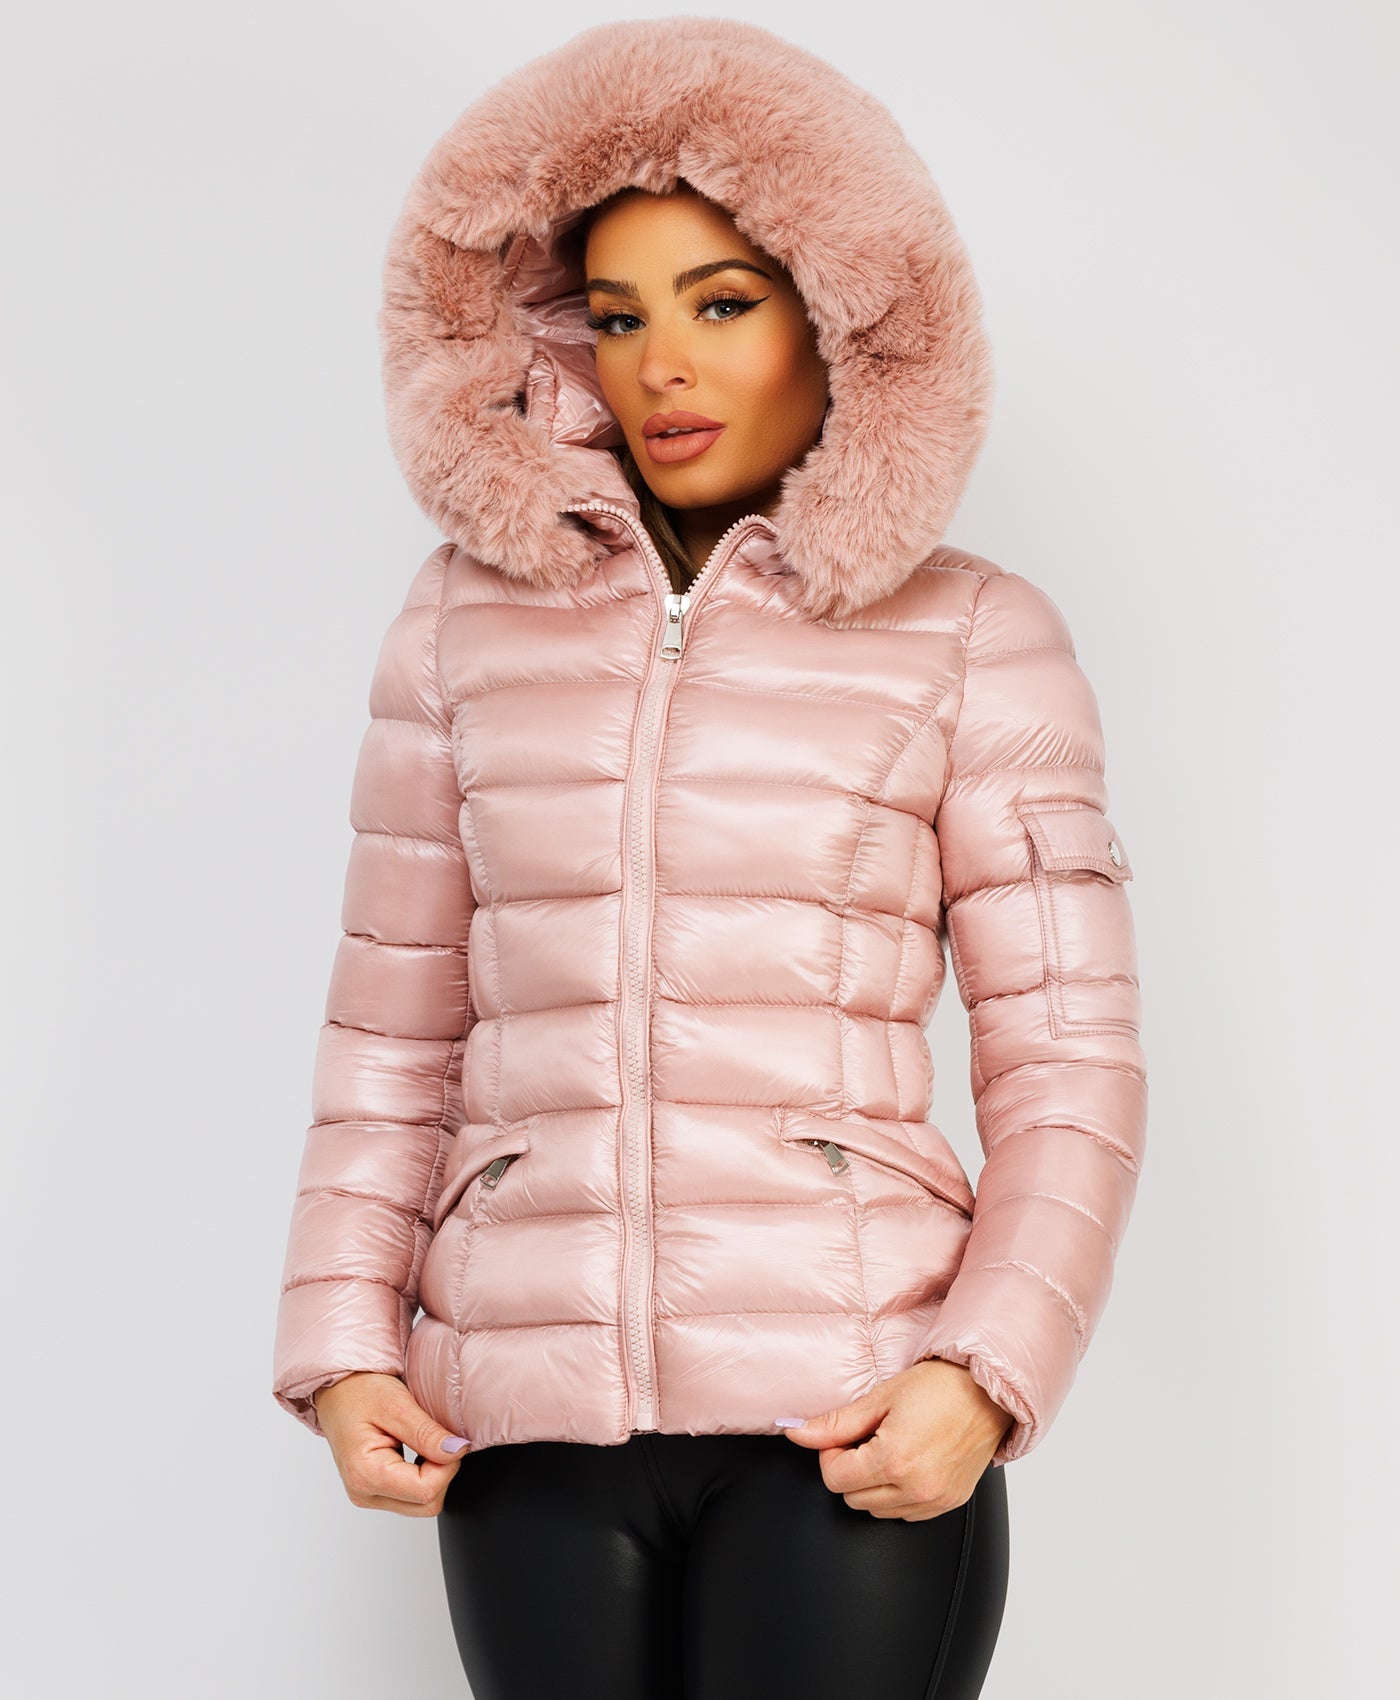 Wet-Look-Shiny-Fur-Trim-Hood-Puffer-Jacket-Pink-4